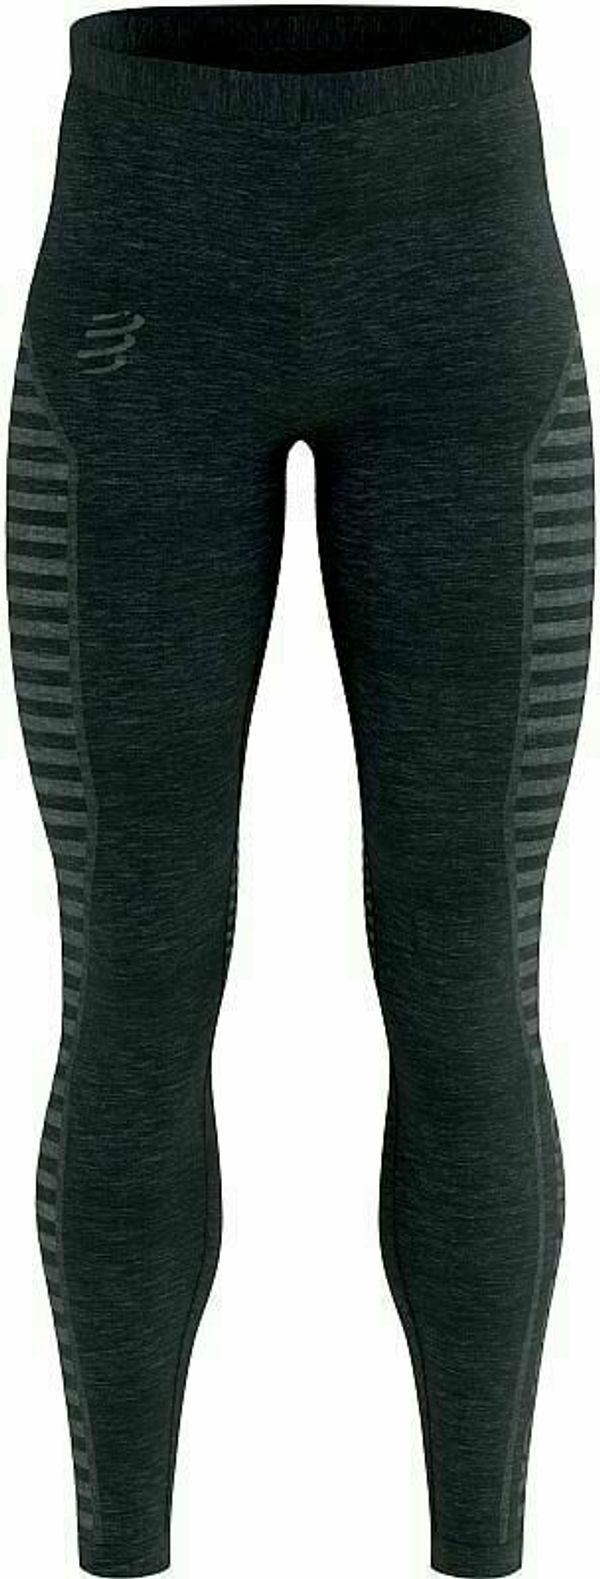 Compressport Compressport Winter Run Legging Black L Панталони за бягане / клинове